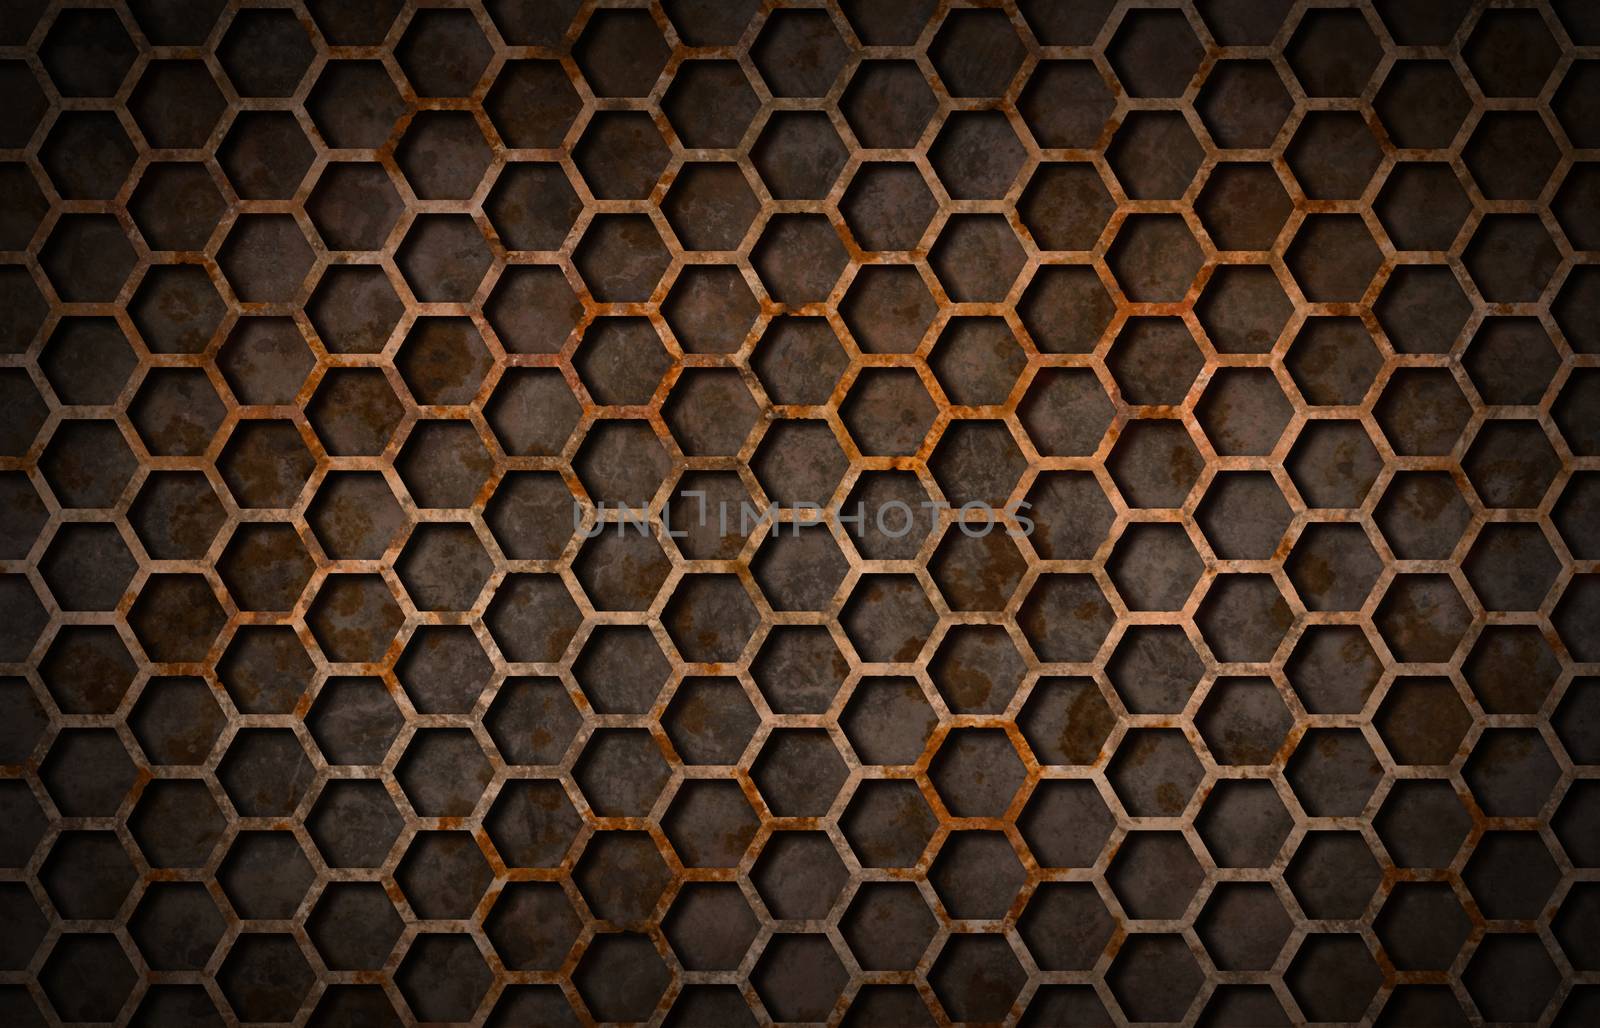 Rusty hexagon pattern grate texture background 